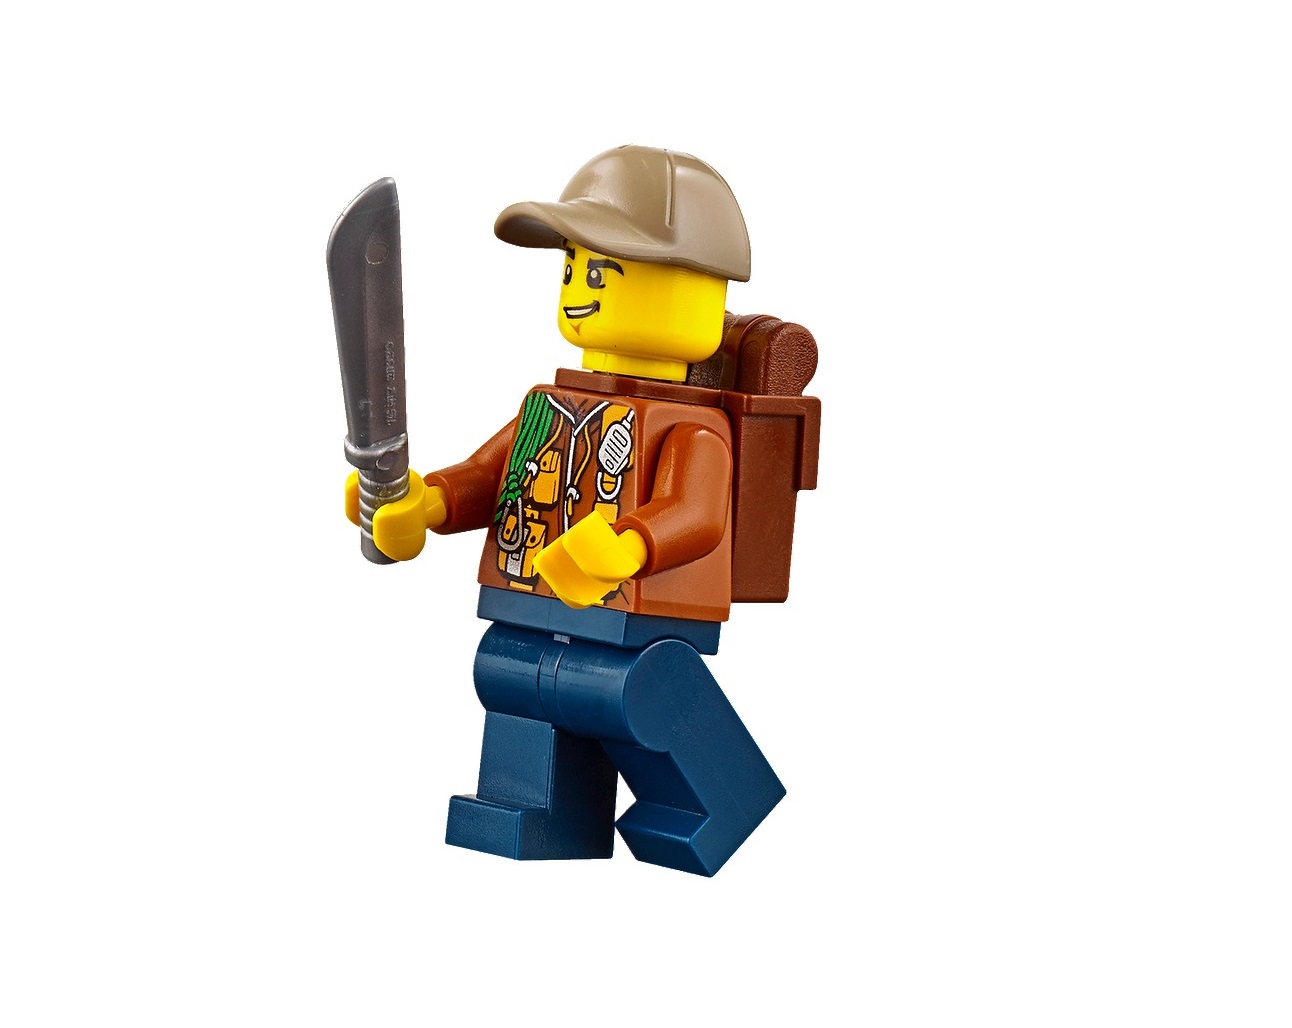 LEGO New City Jungle Explorer Minifigure with Machete Weapon 